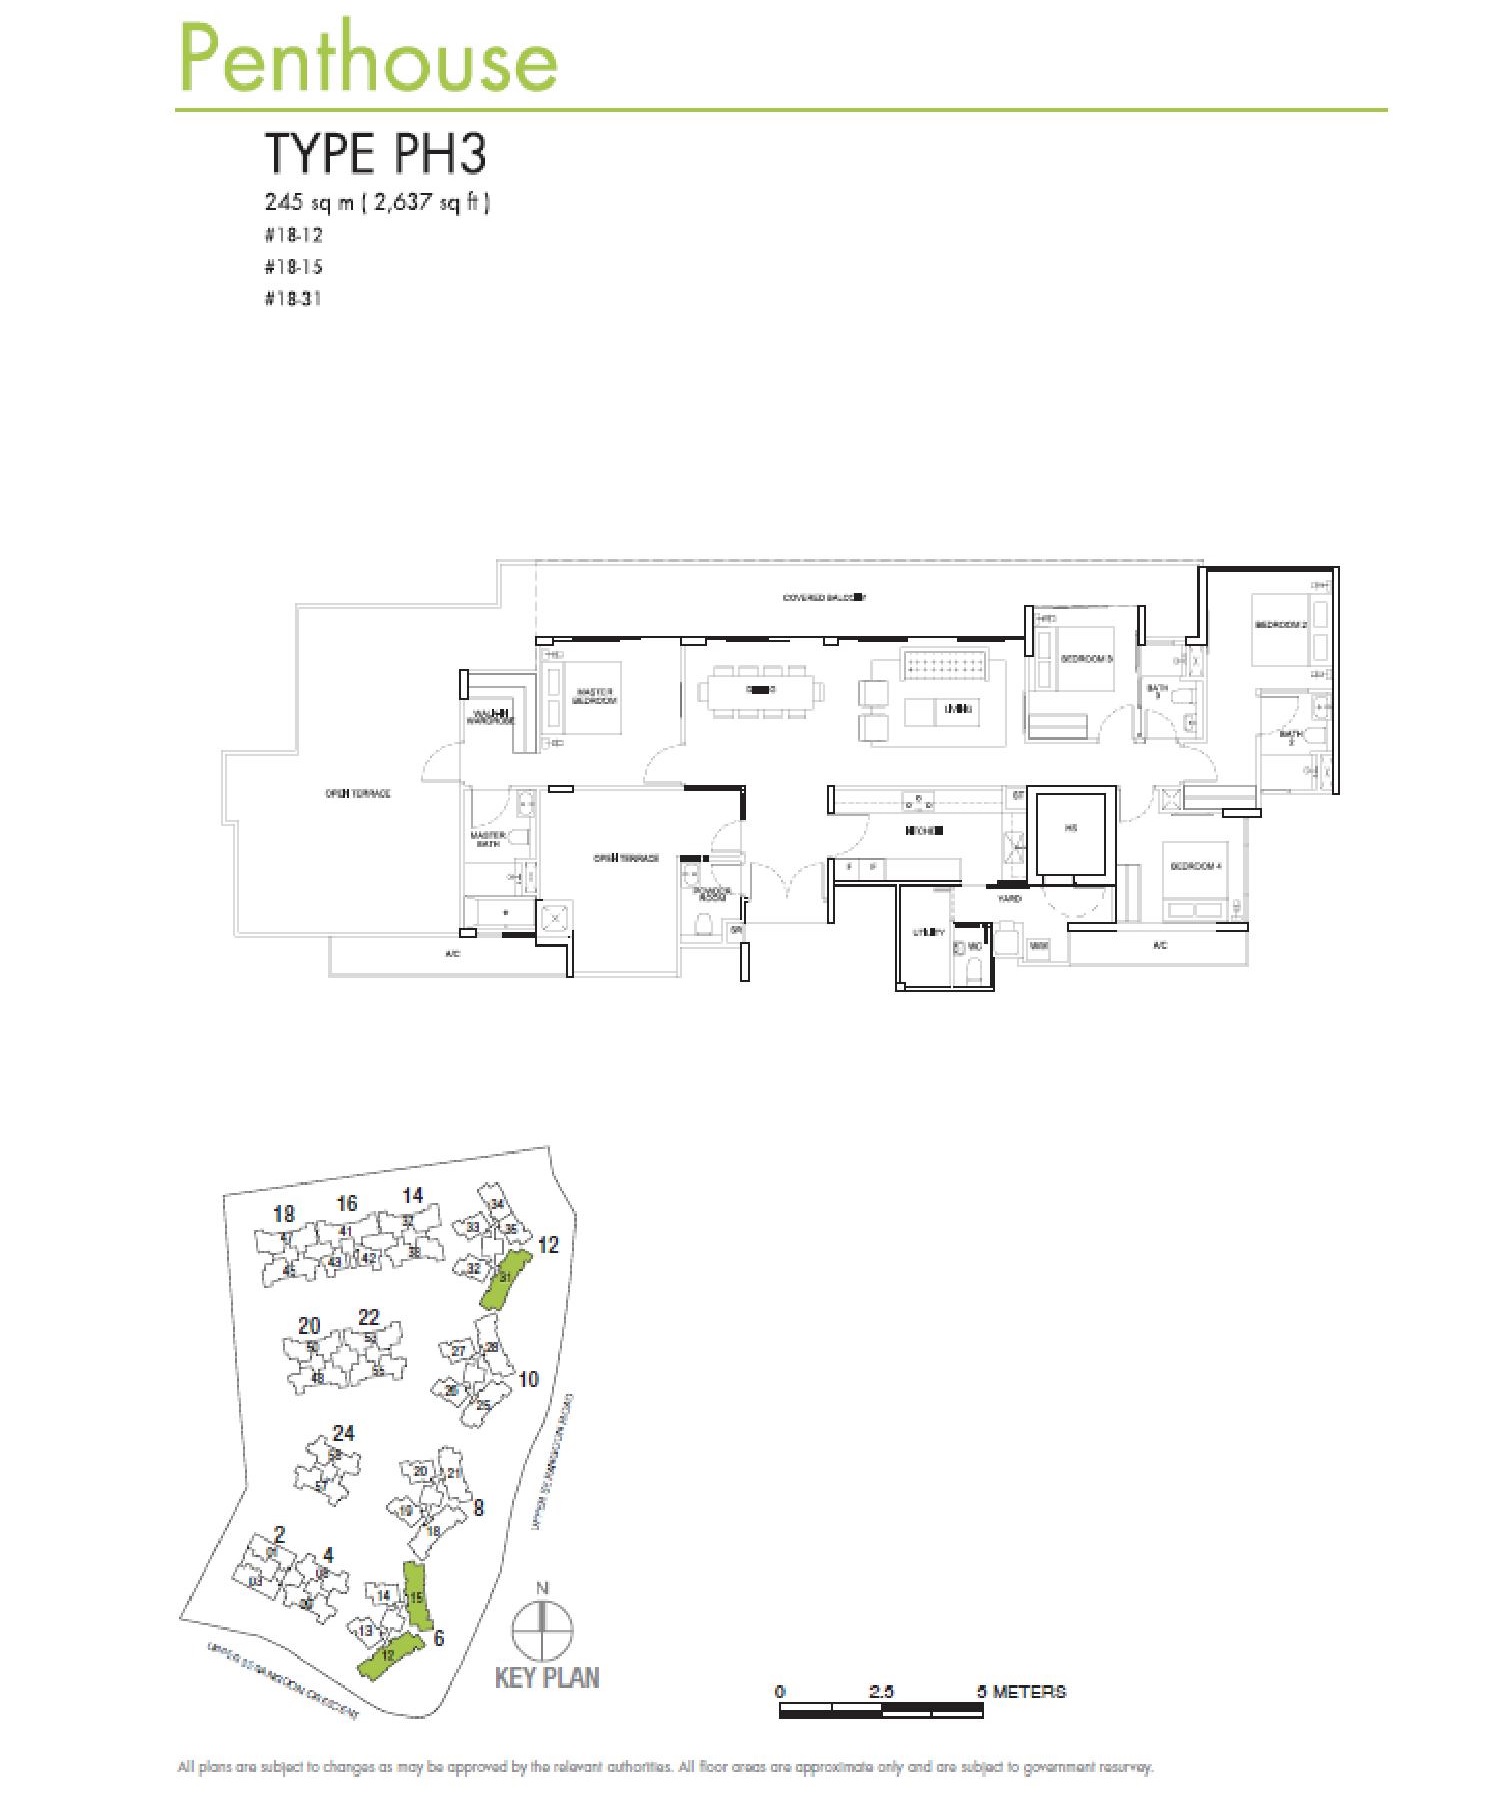 RiverSails 4 Bedroom Penthouse Type PH3 Floor Plans